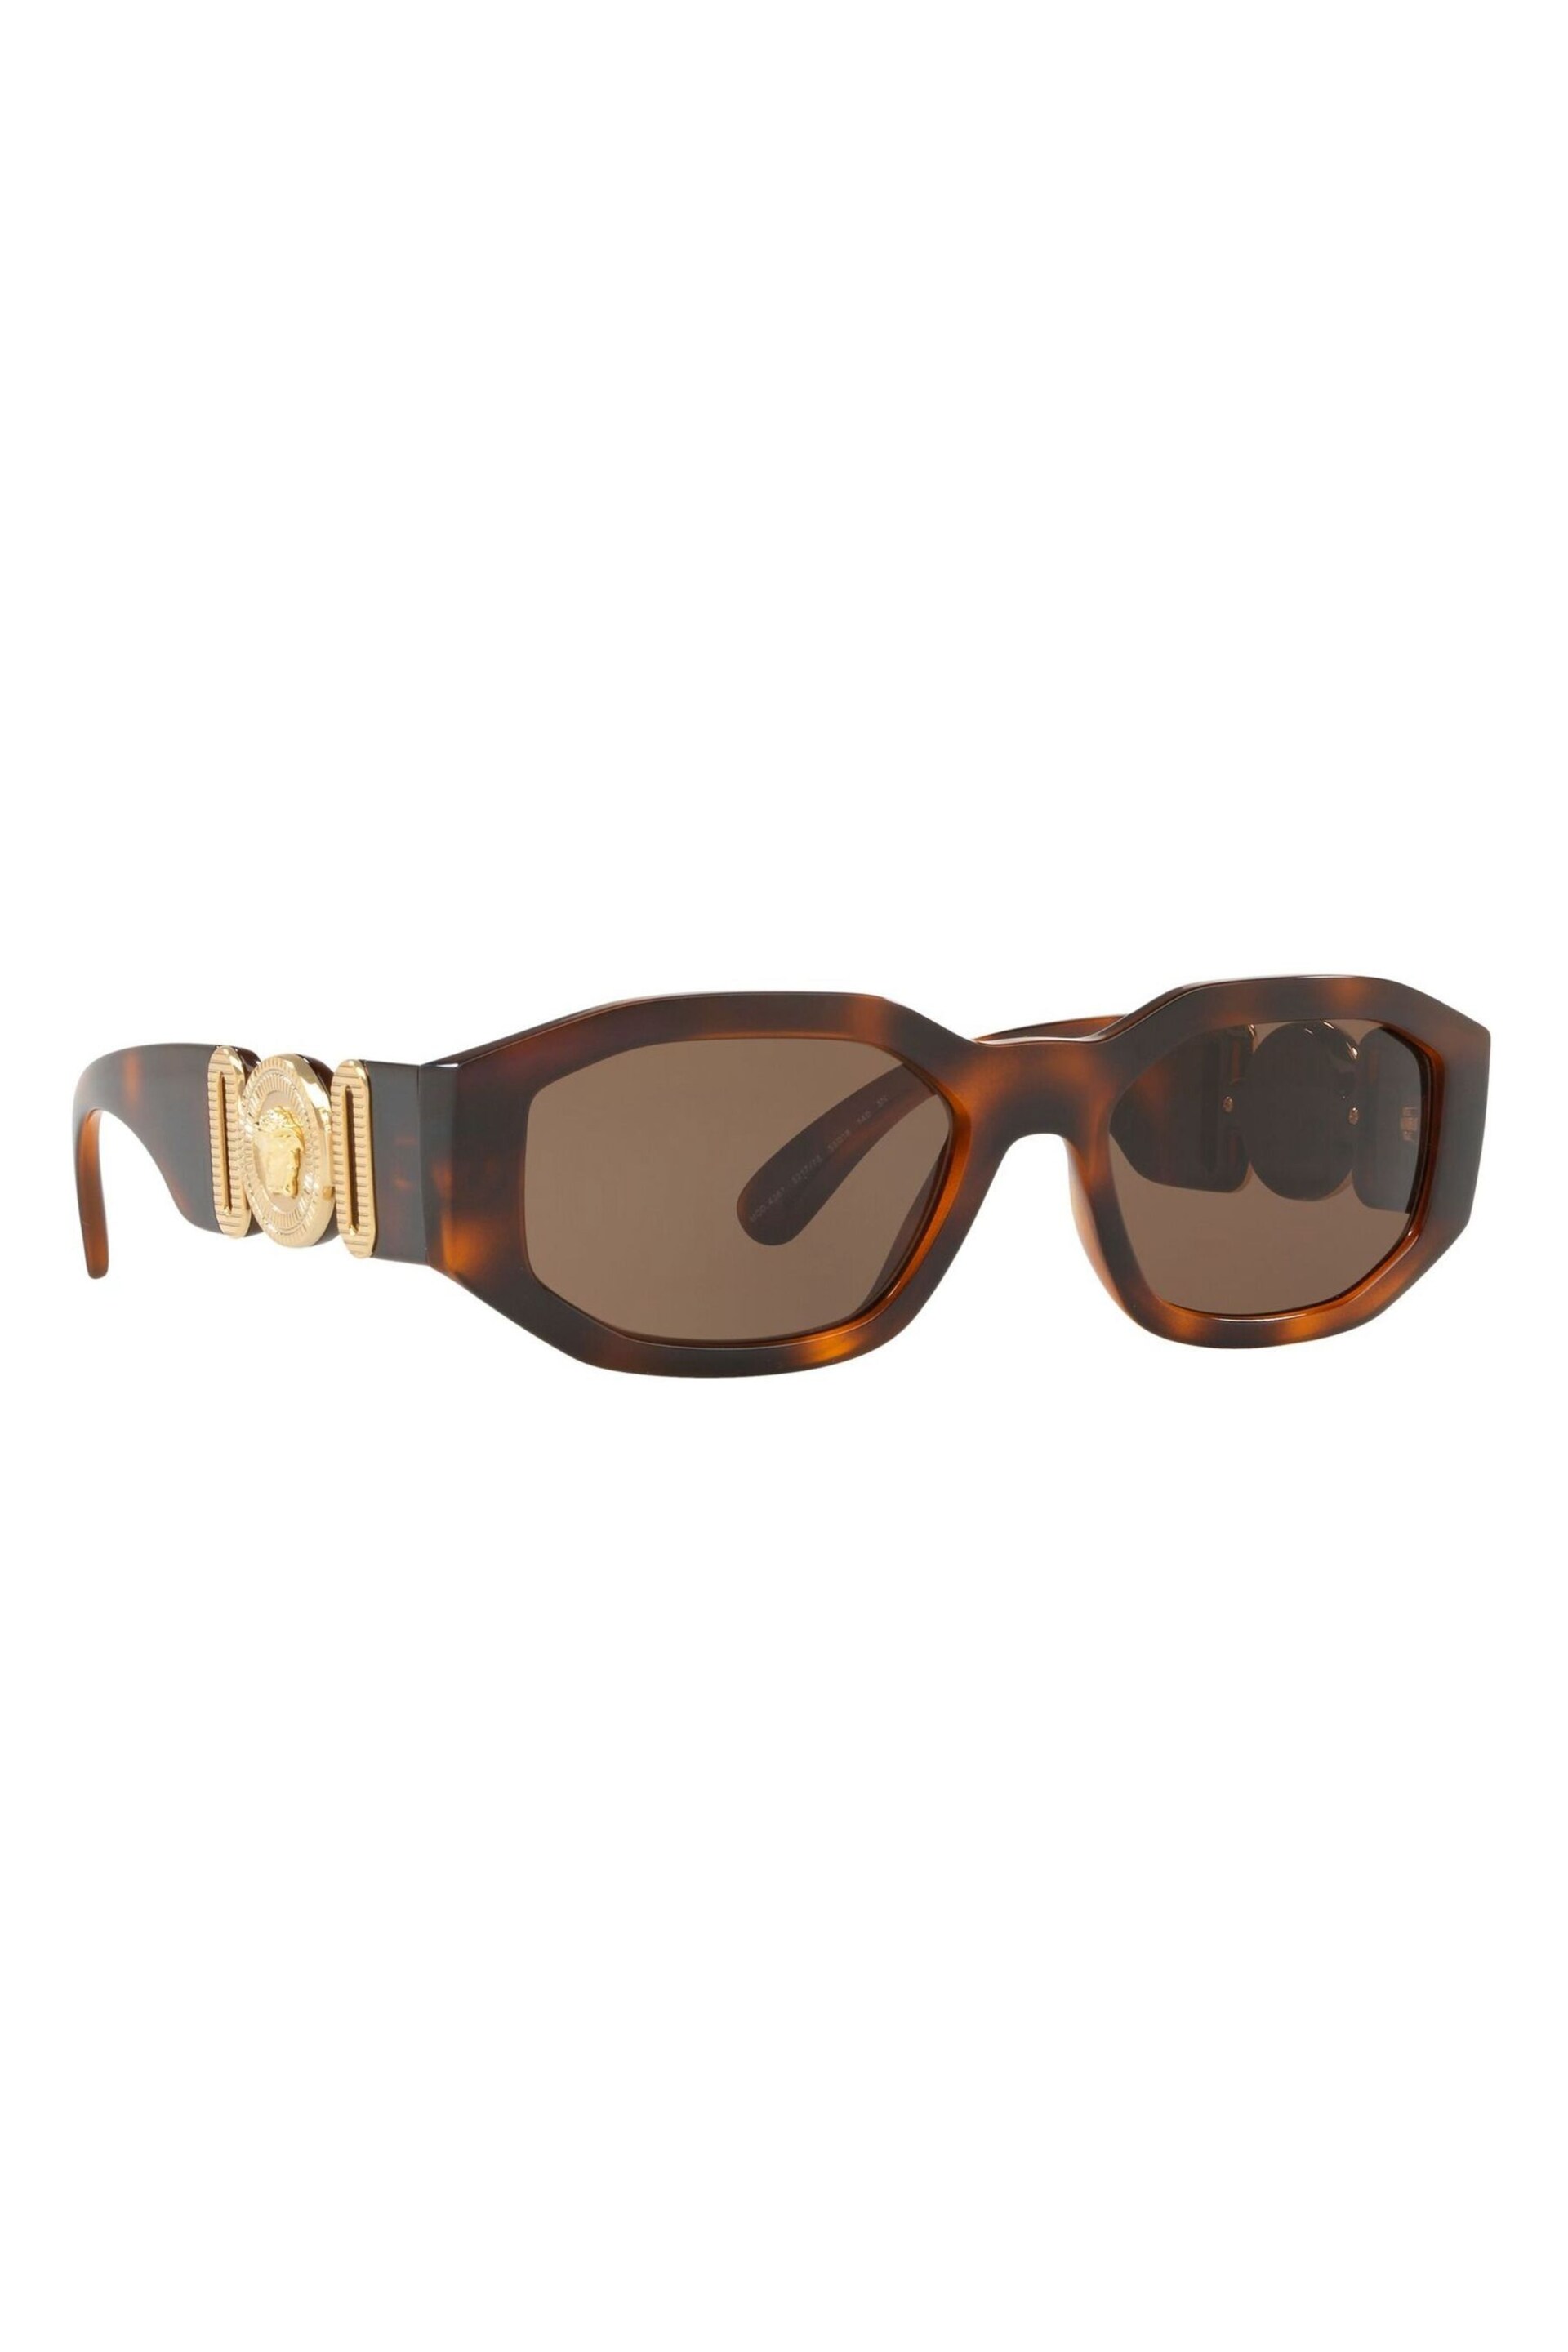 Versace Brown Medusa Biggie Sunglasses - Image 4 of 12